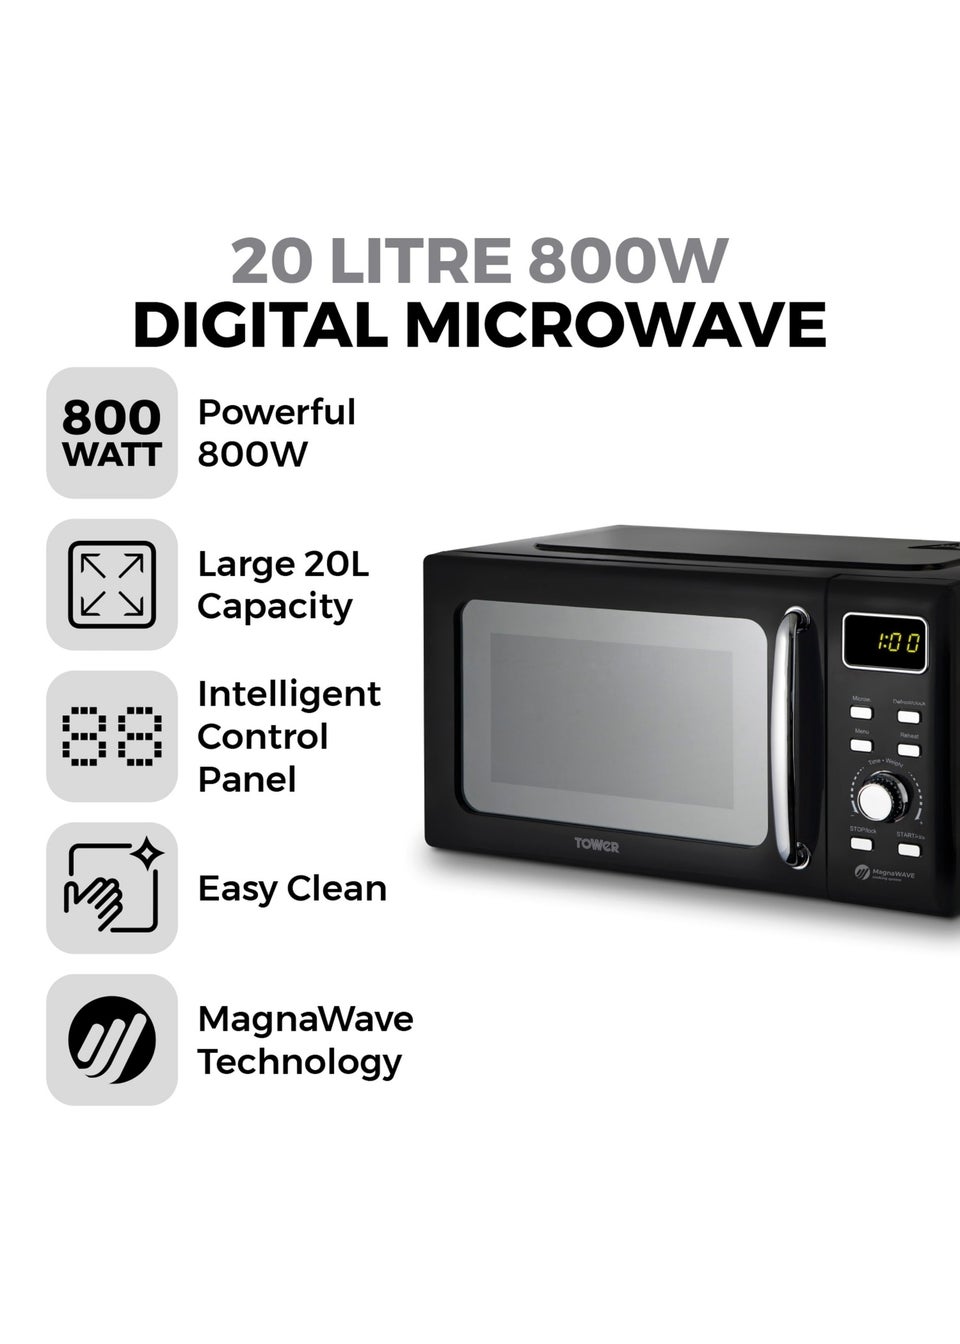 Tower 800W Digital Microwave (20L)